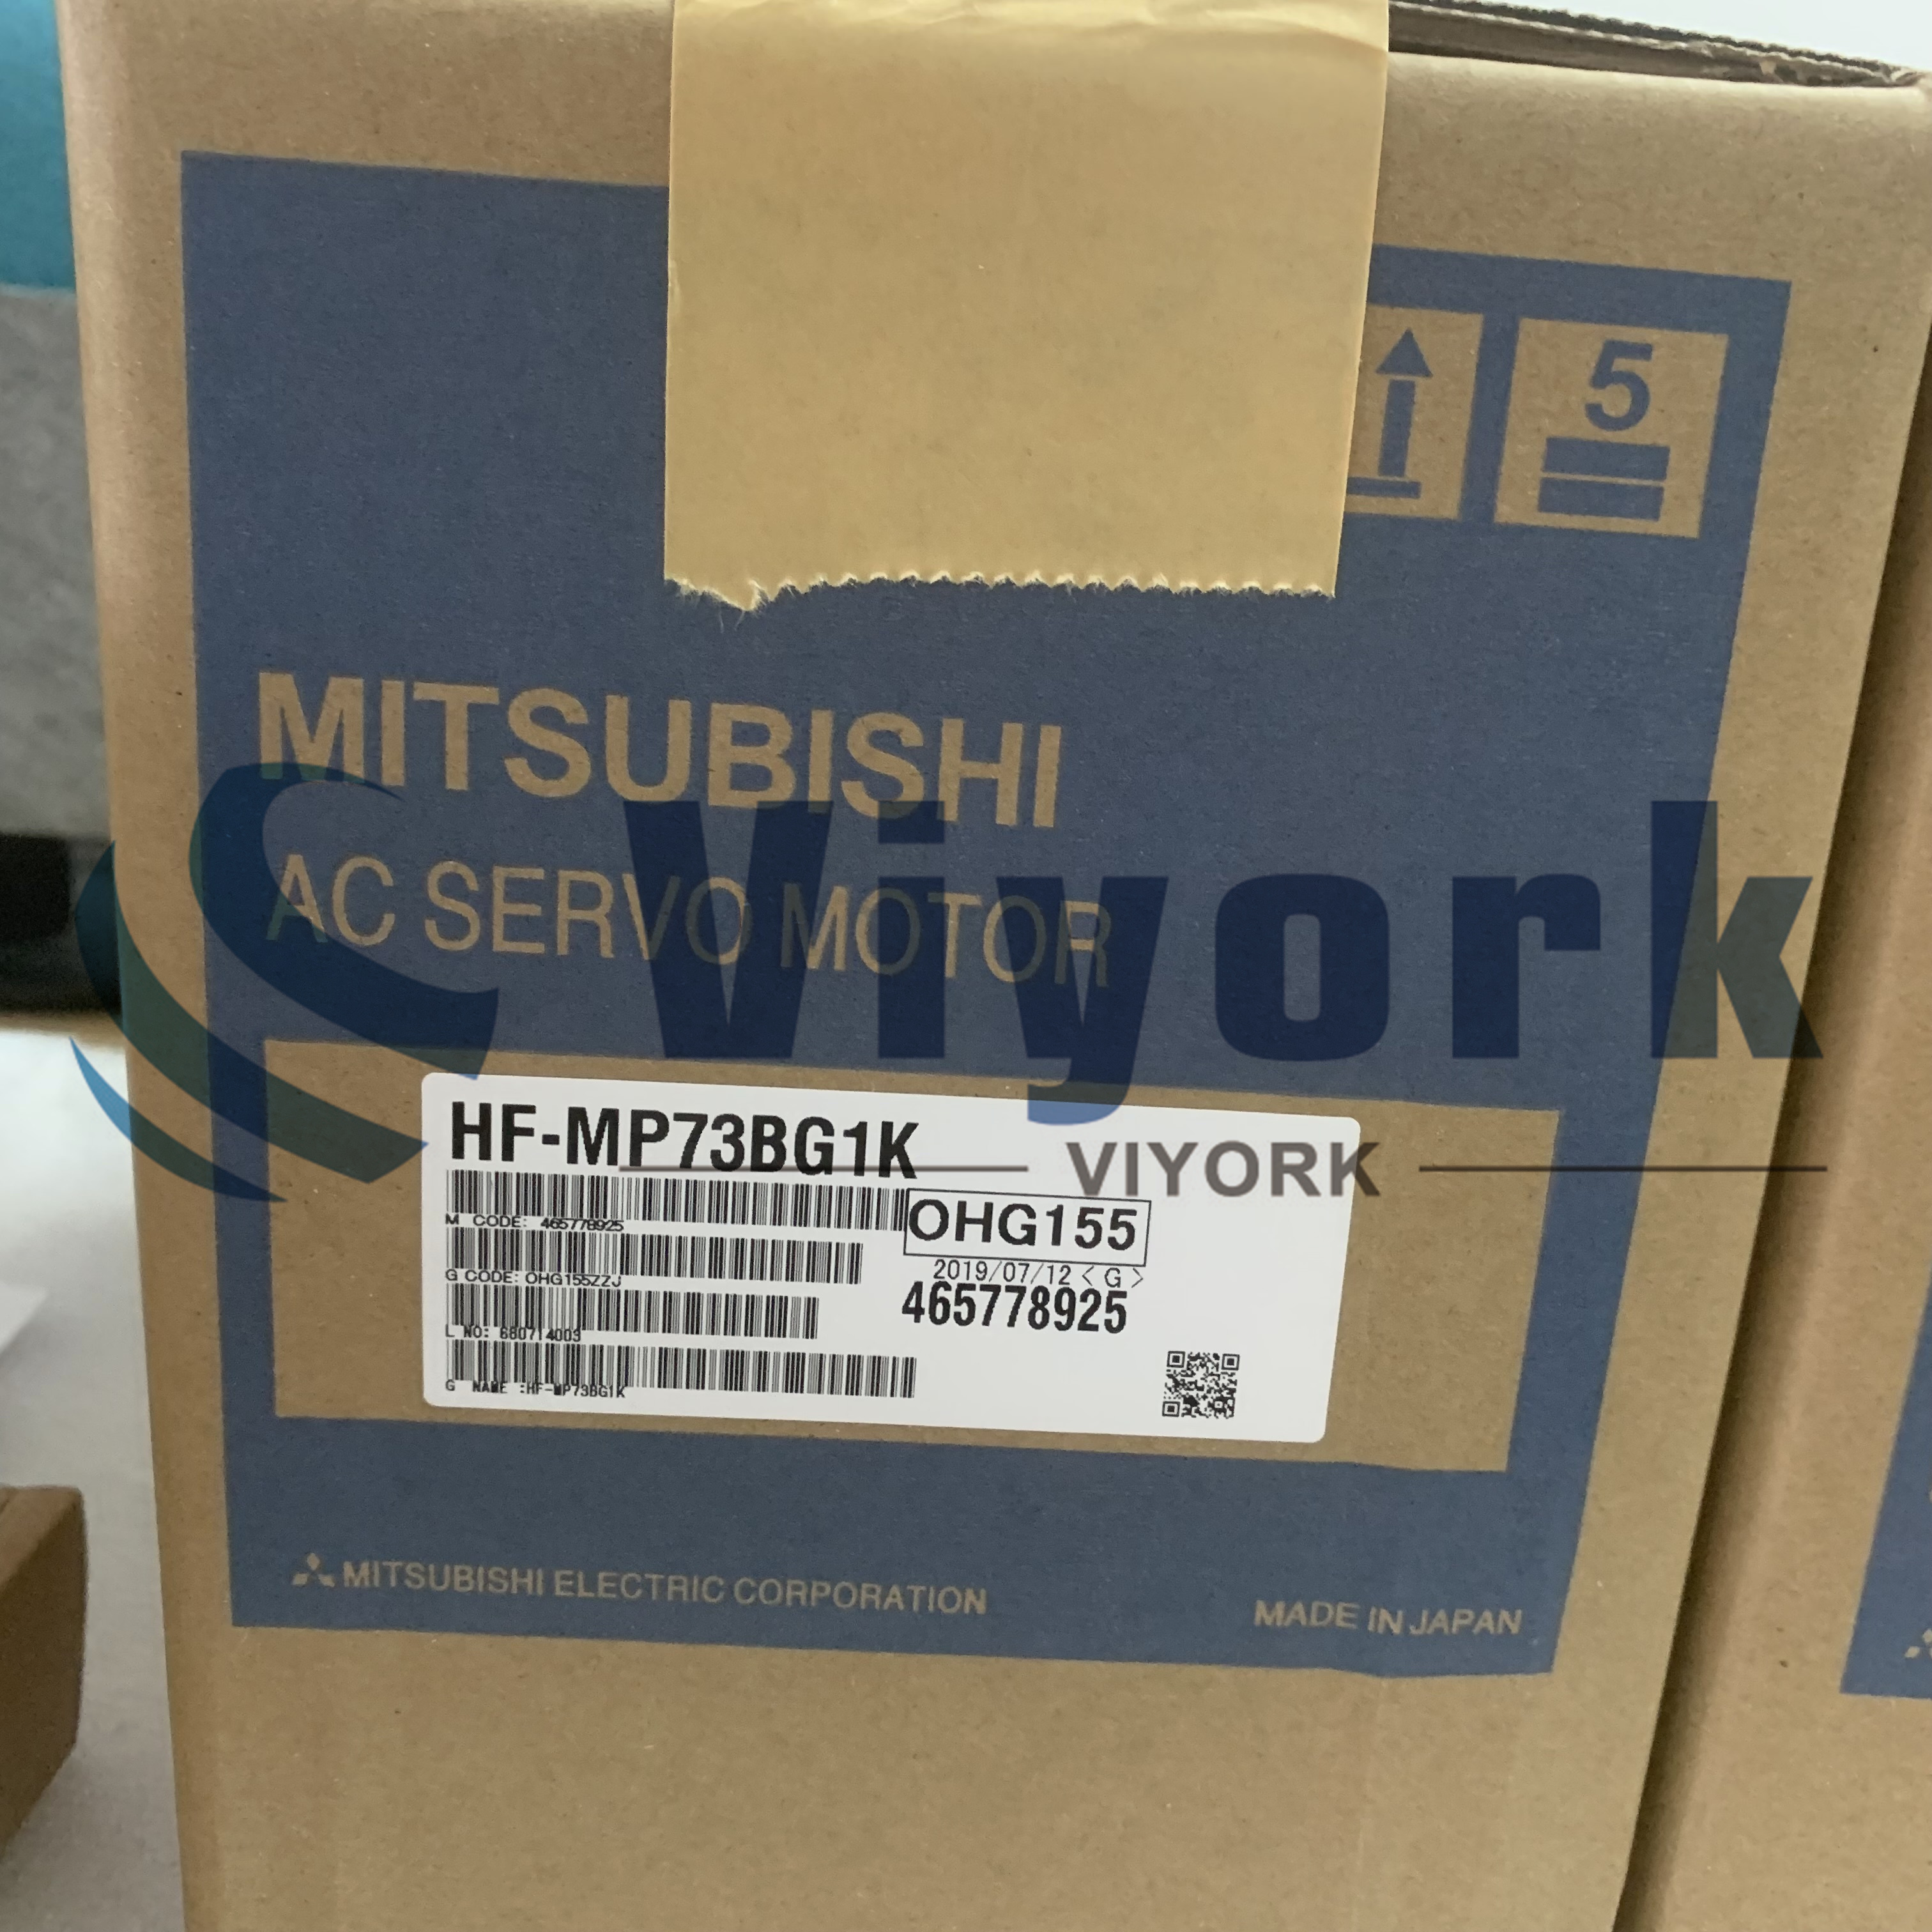 Mitsubishi HF-MP73BG1K AC SERVO MOTOR 750W 3000RPM WITH THE GEAR 1:5 NEW